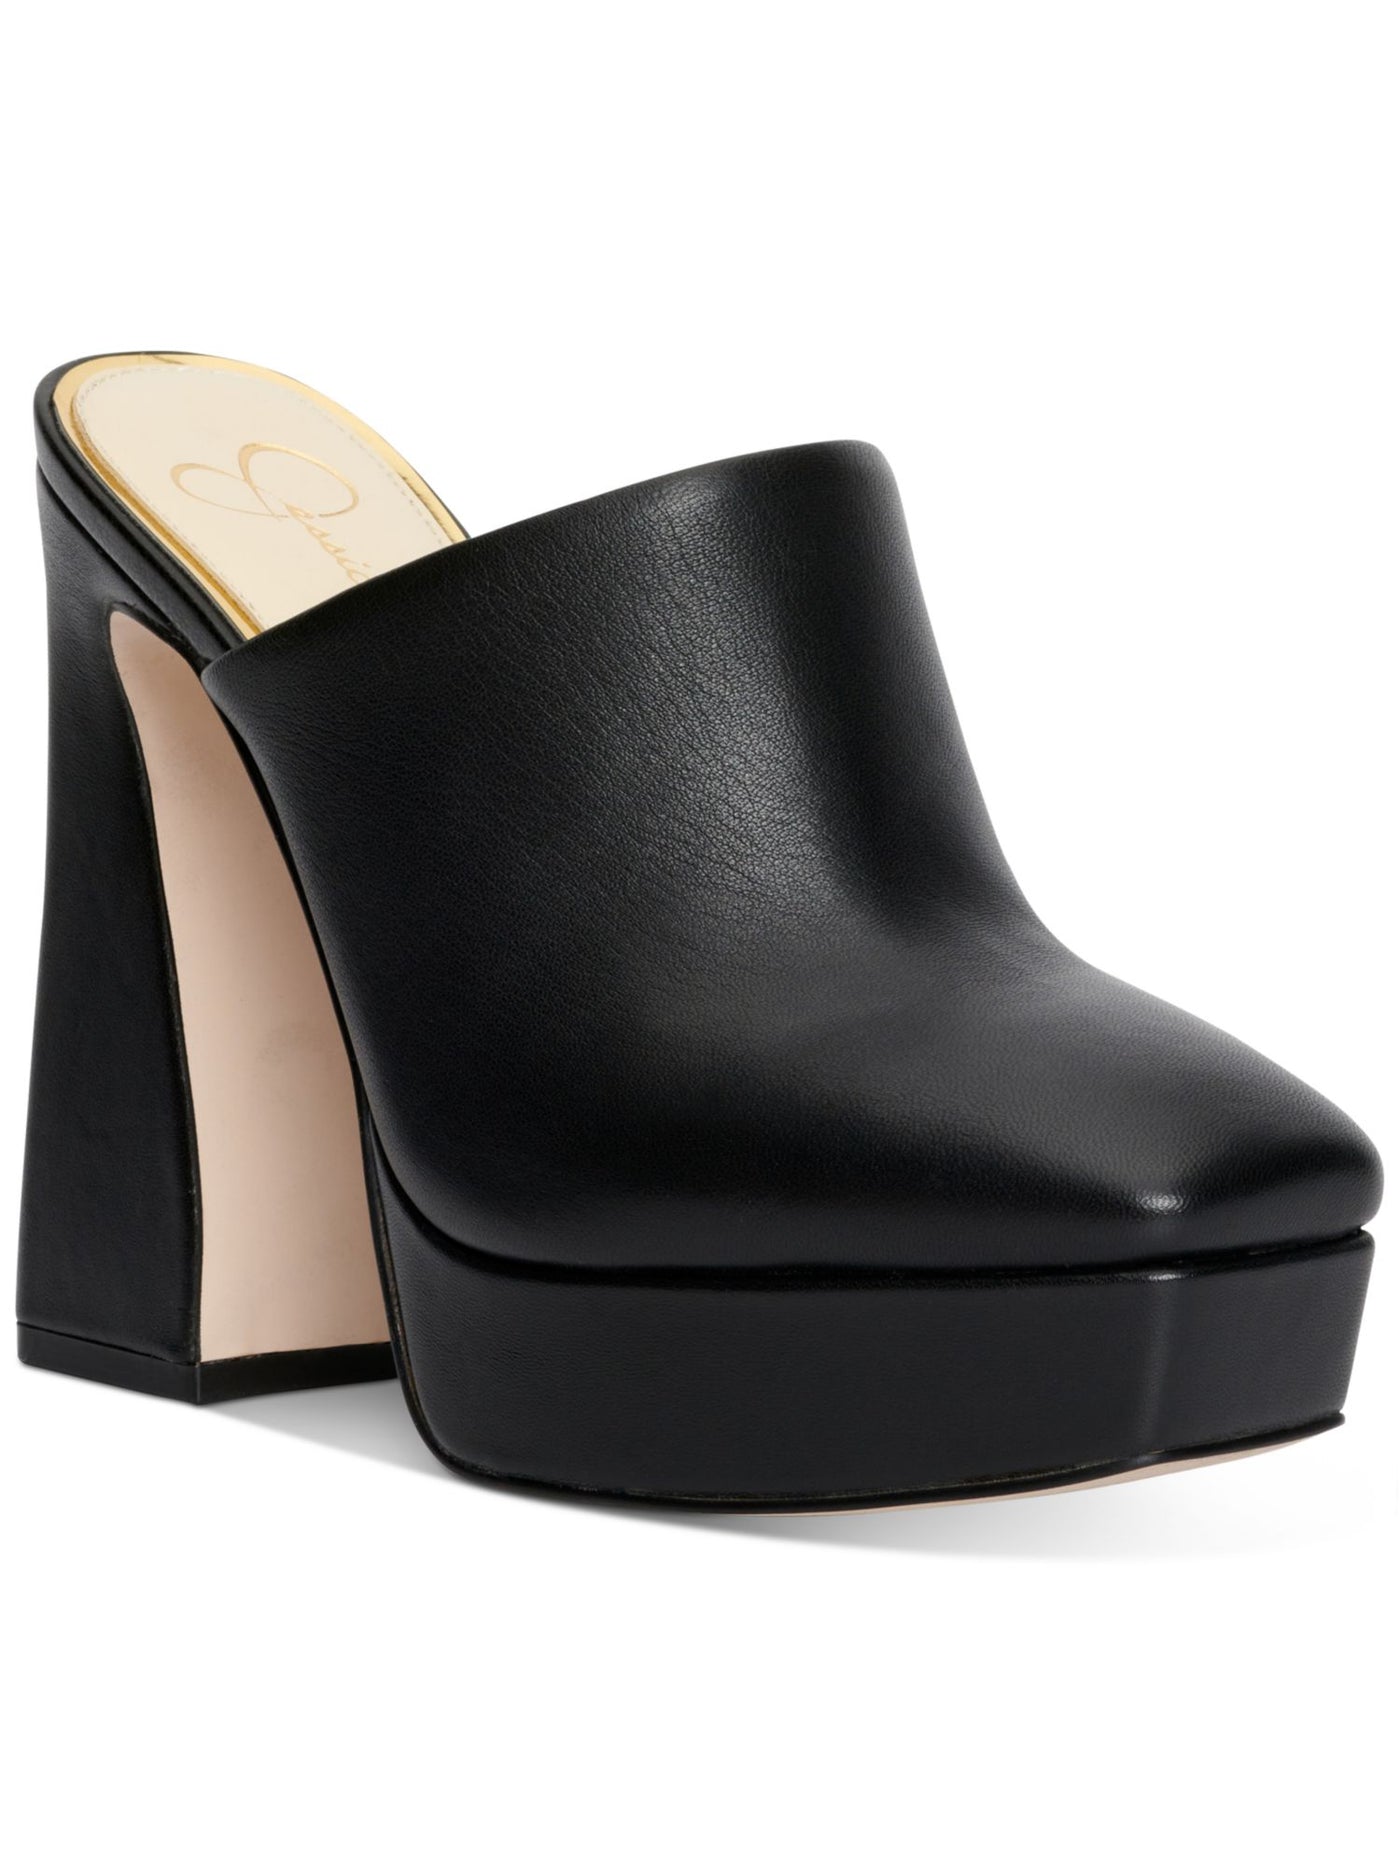 JESSICA SIMPSON Womens Black 1-1/2" Platform Denima Square Toe Slip On Leather Heeled Mules Shoes 10 M